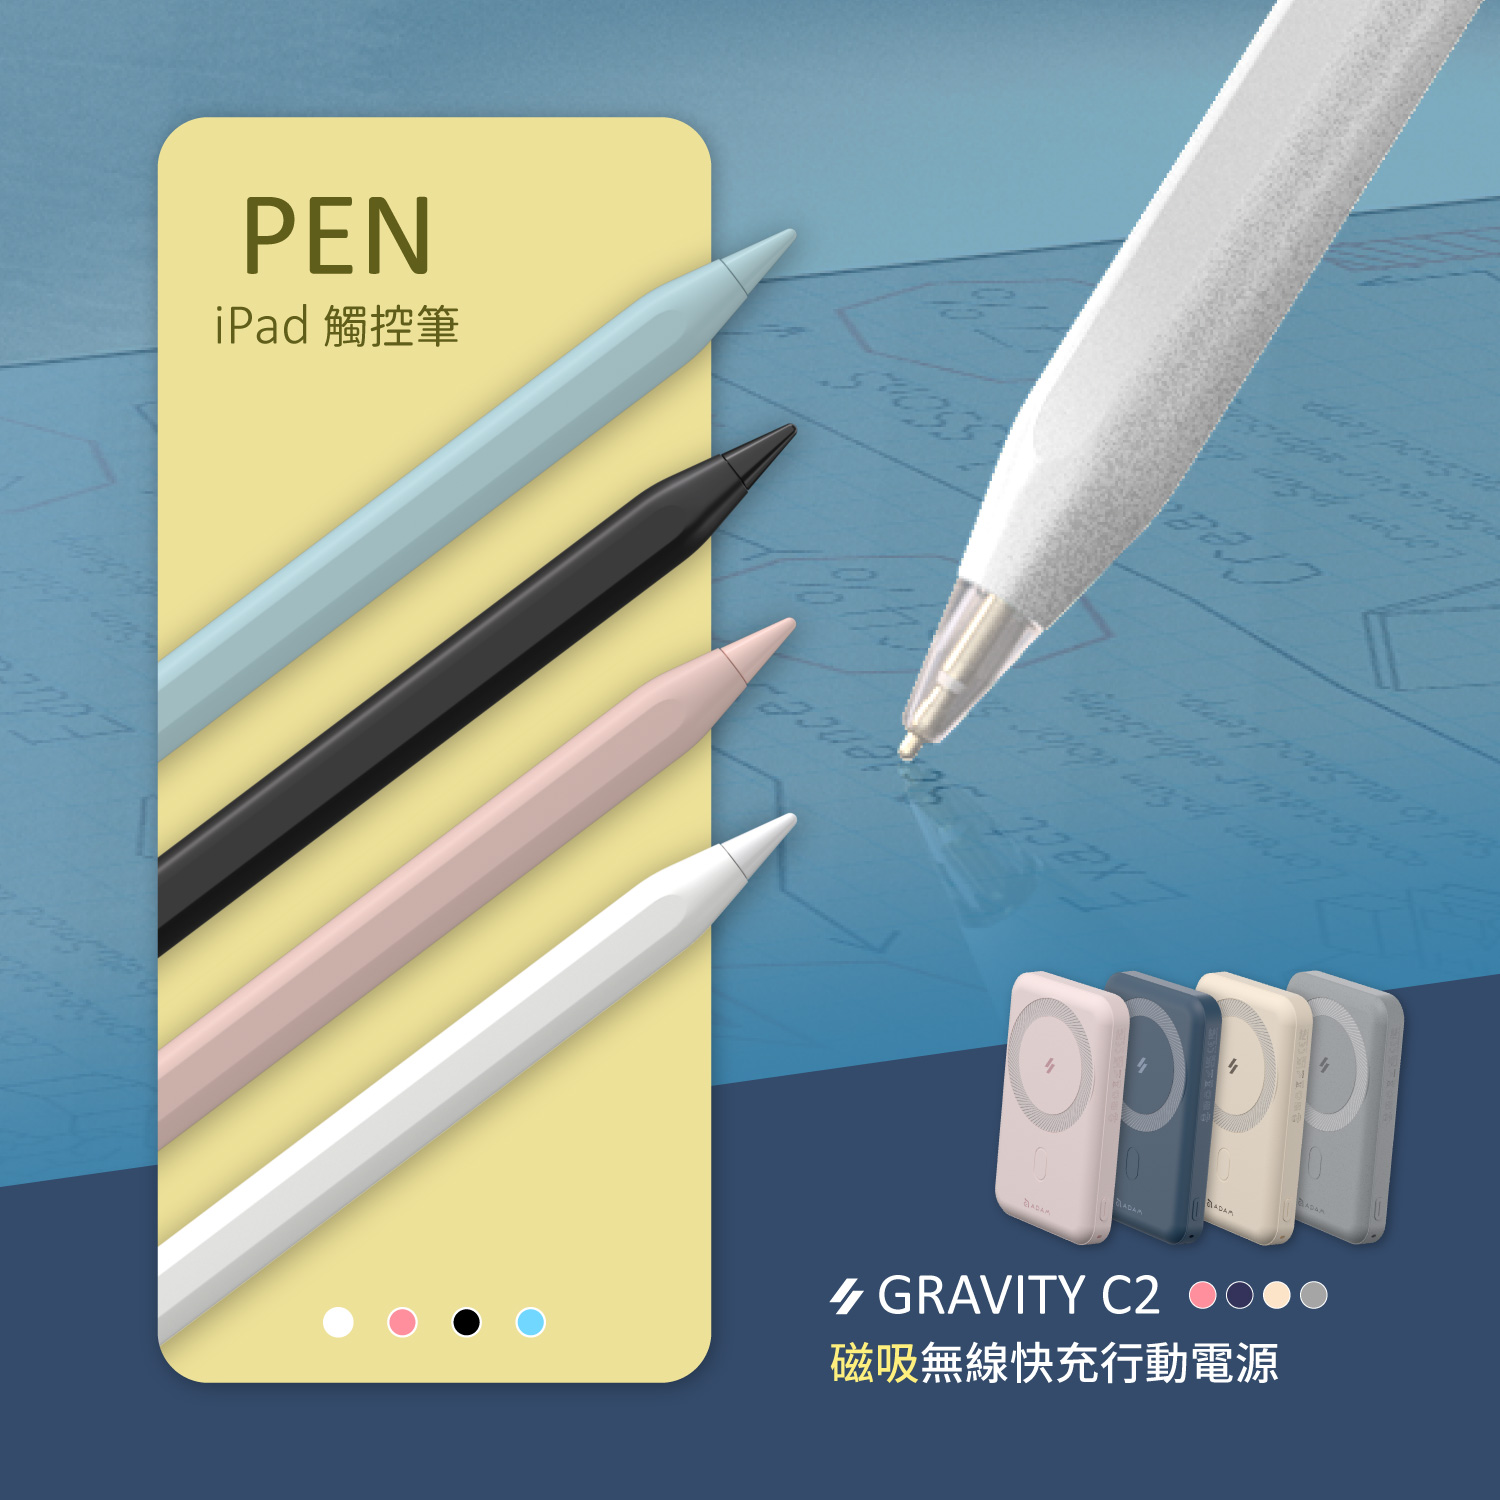 PEN iPad 觸控筆_GRAVITY C2 磁吸無線快充行動電源